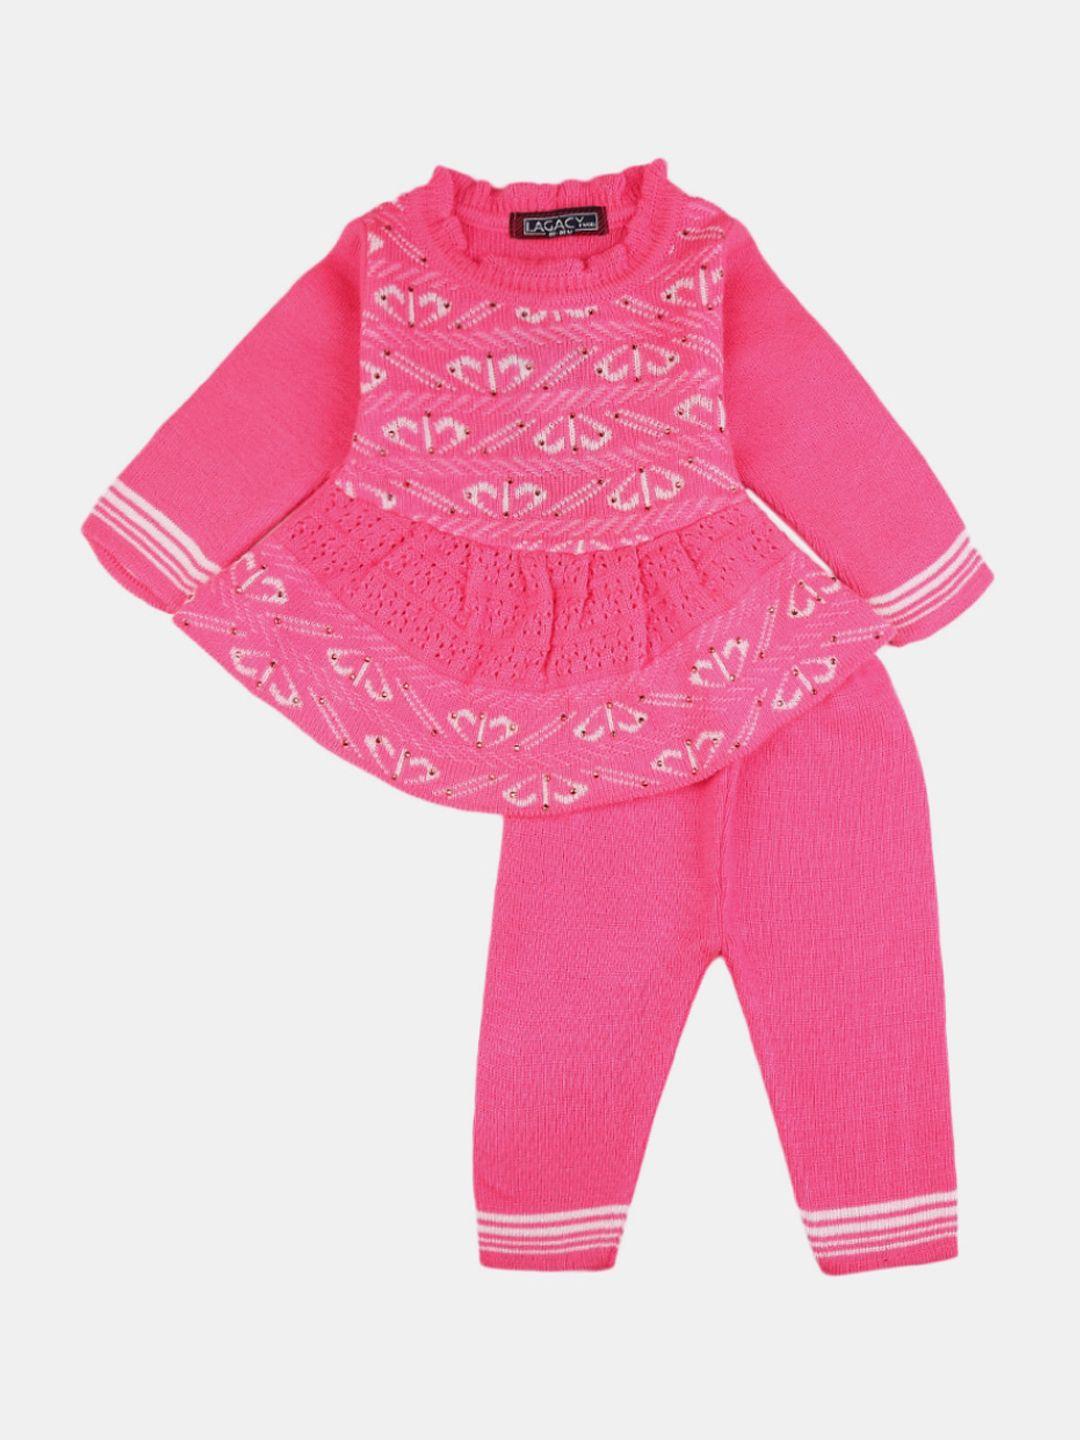 v-mart-unisex-kids-pink-&-off-white-clothing-set